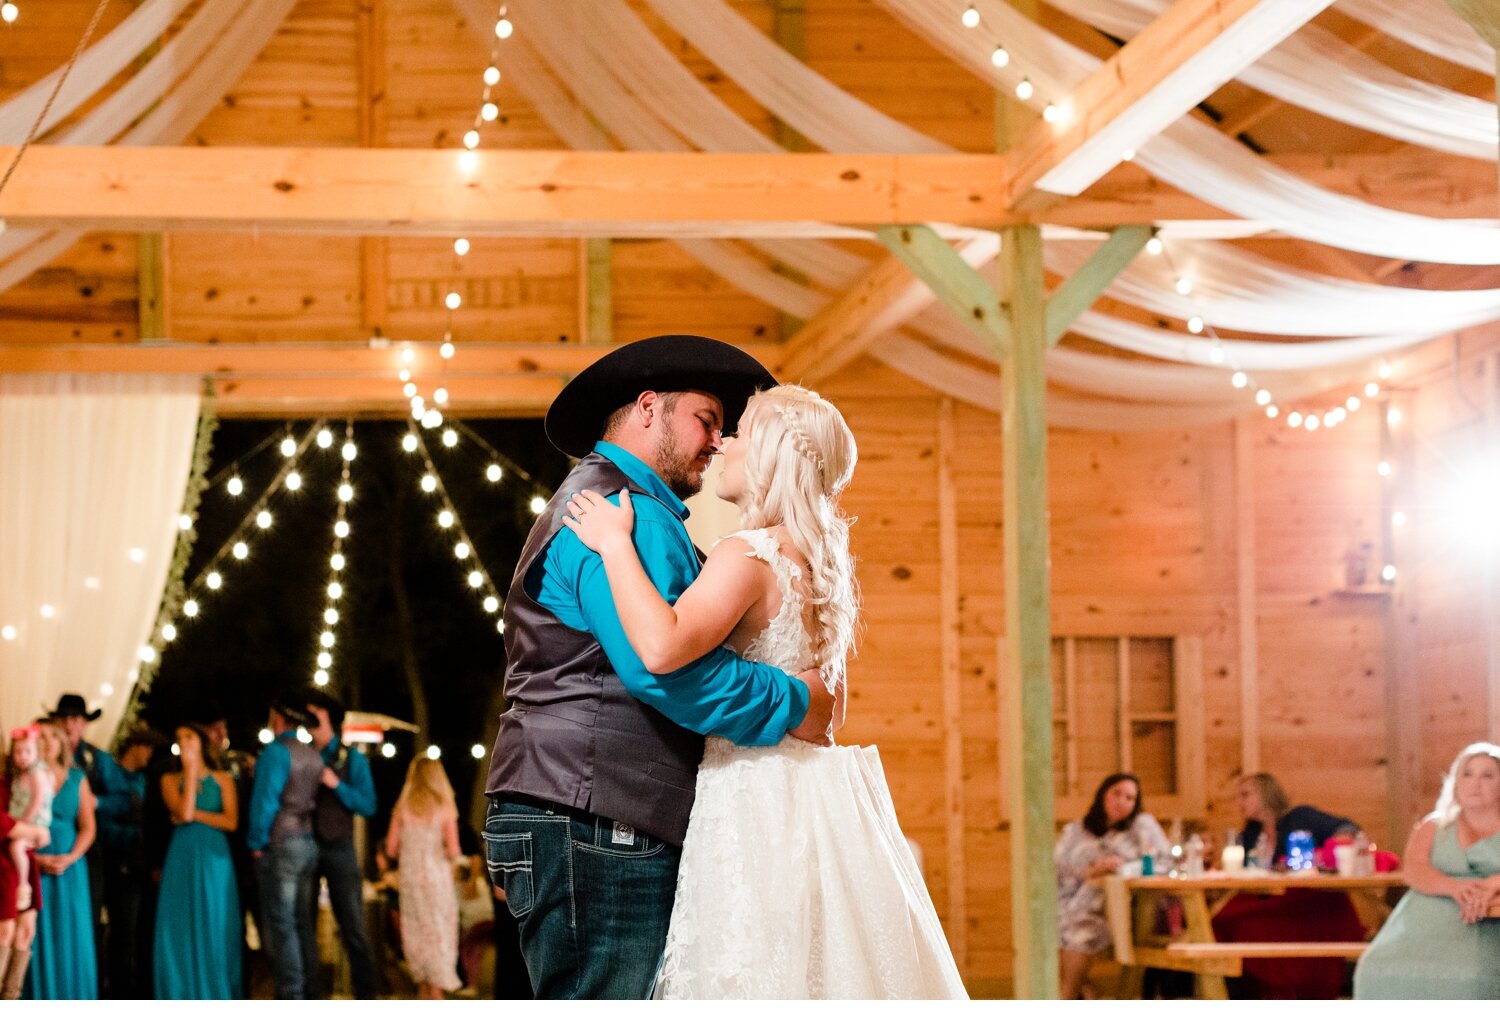 Destinnee + Chance Rustic Barn Wedding at Elm Creek Ranch_0087.jpg